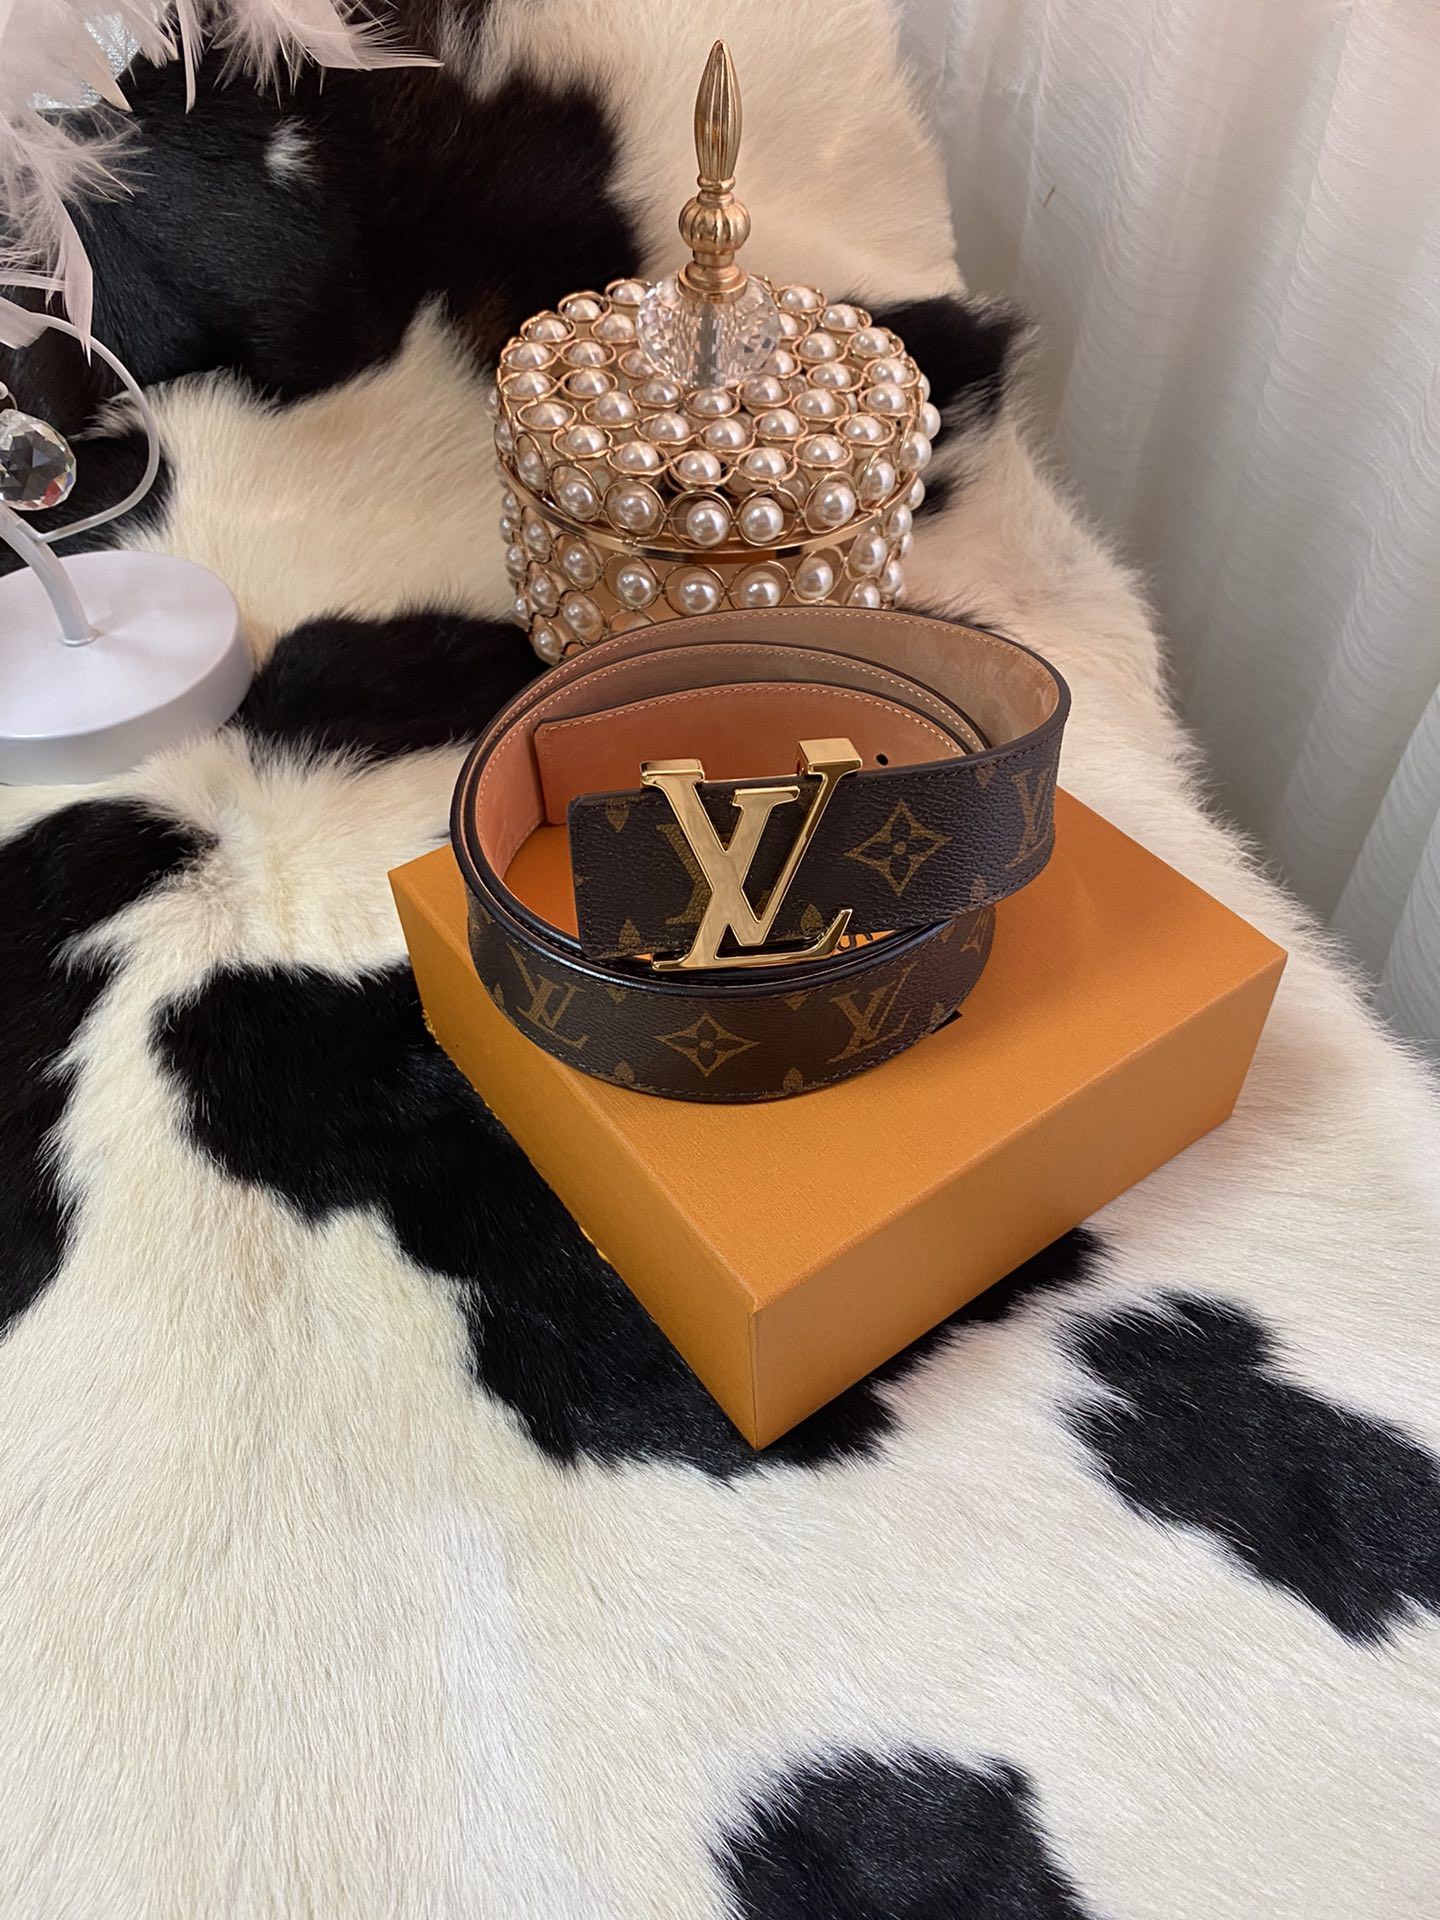 Louis Vuitton Belt: Luxury Accessories for Discerning Individuals